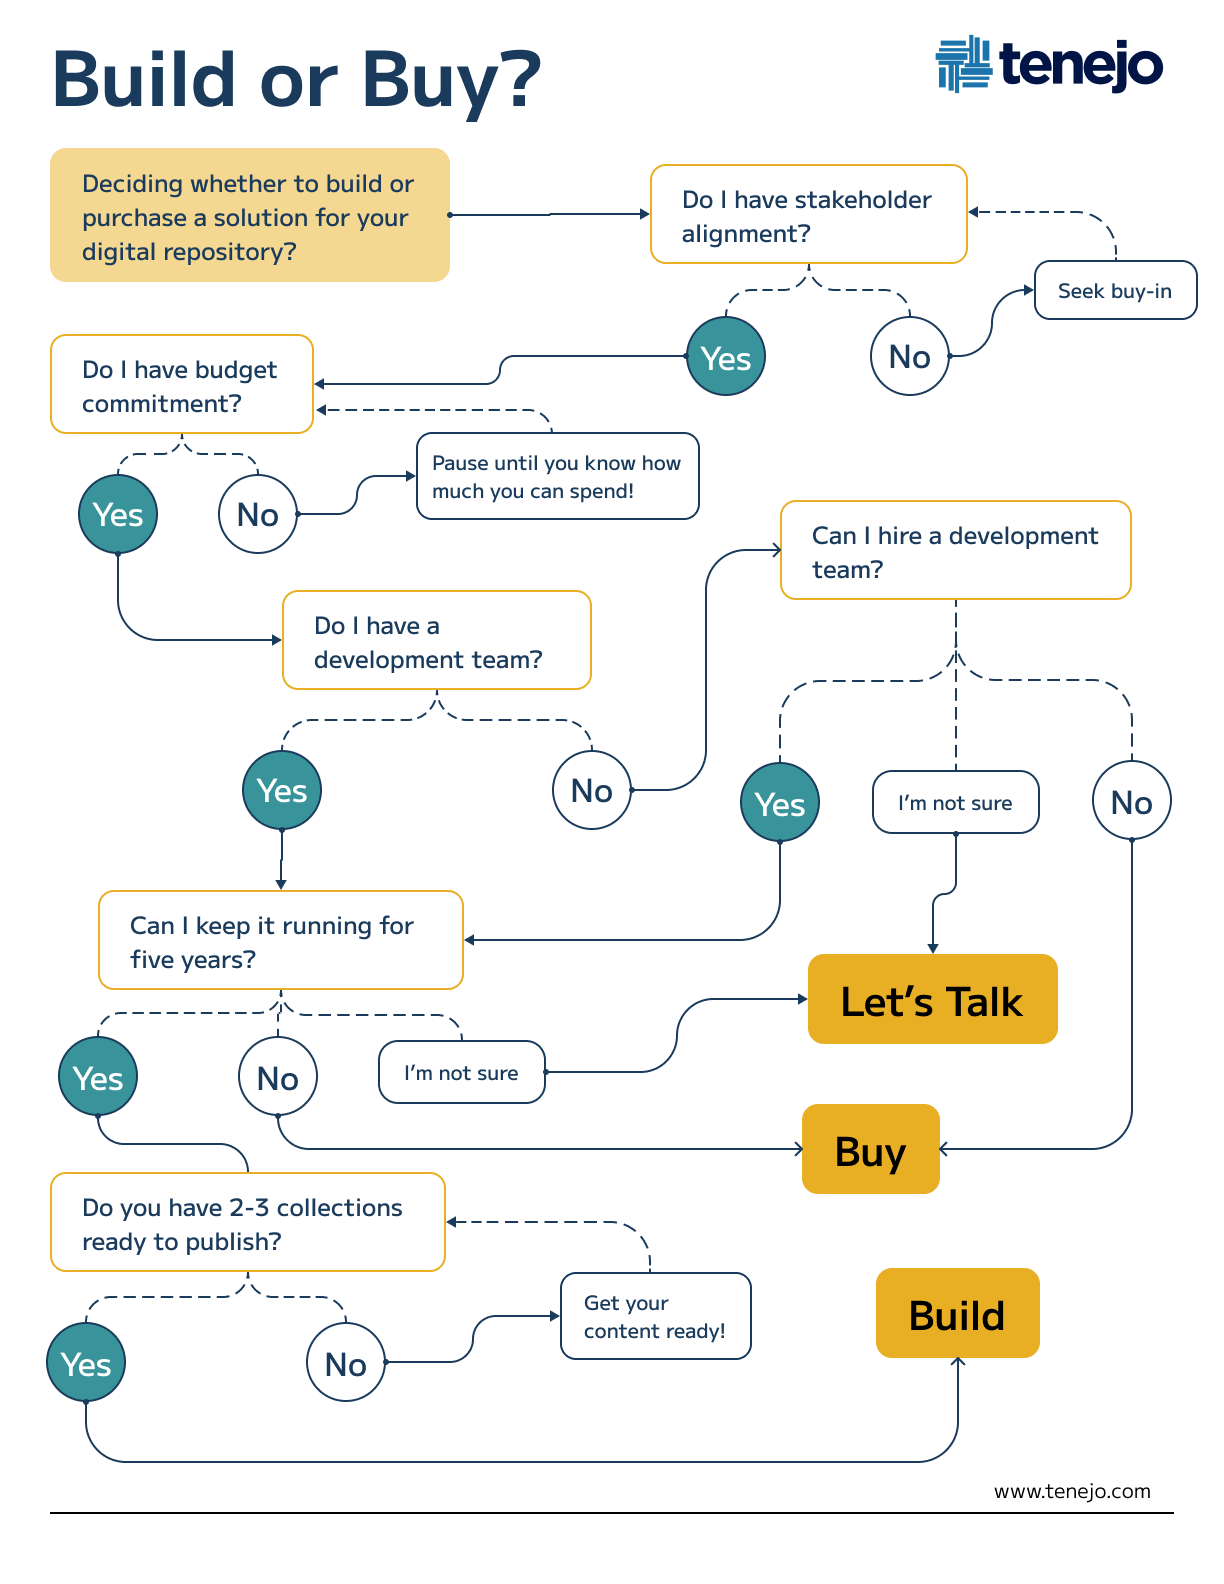 Tenejo build or buy infographic decision tree